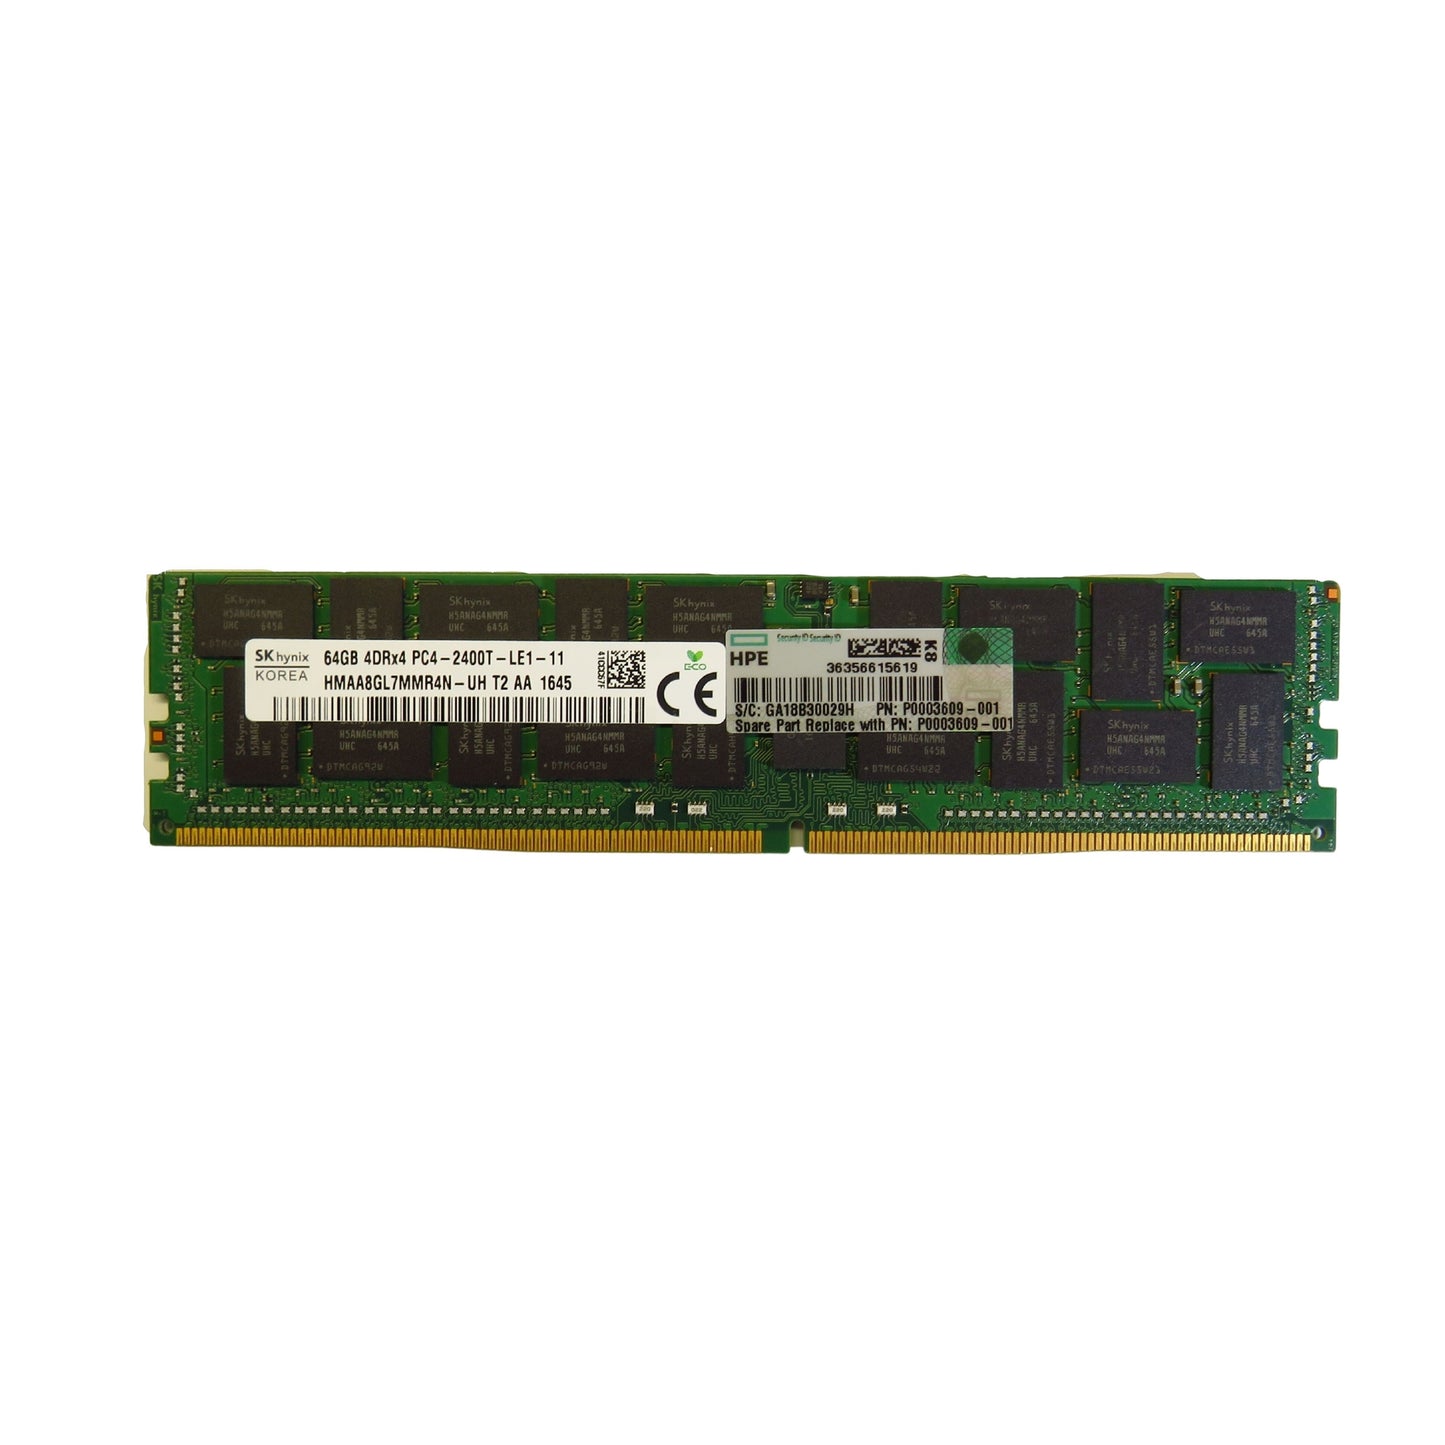 HPE P0003609-001 64GB 4DRx4 PC4-2400T 2400MHz LRDIMM Server Memory (Refurbished)